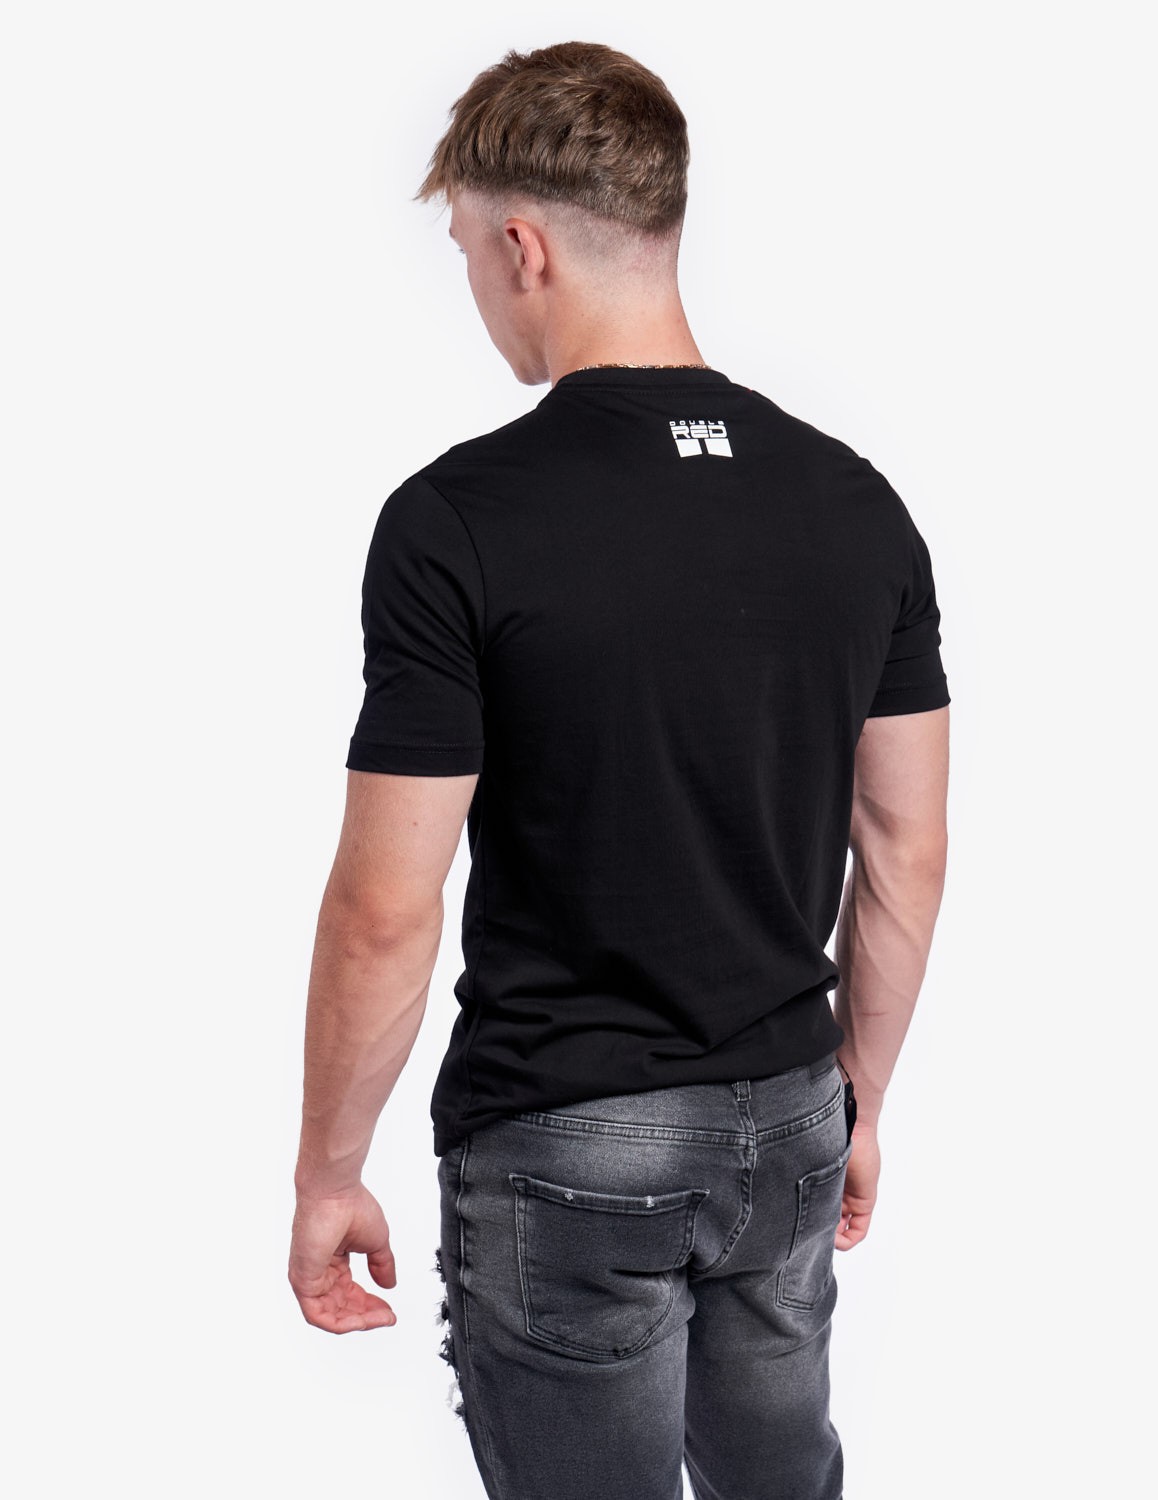 T-shirt CAMODRESSCODE™ TradeMark™ Black/Turquoise